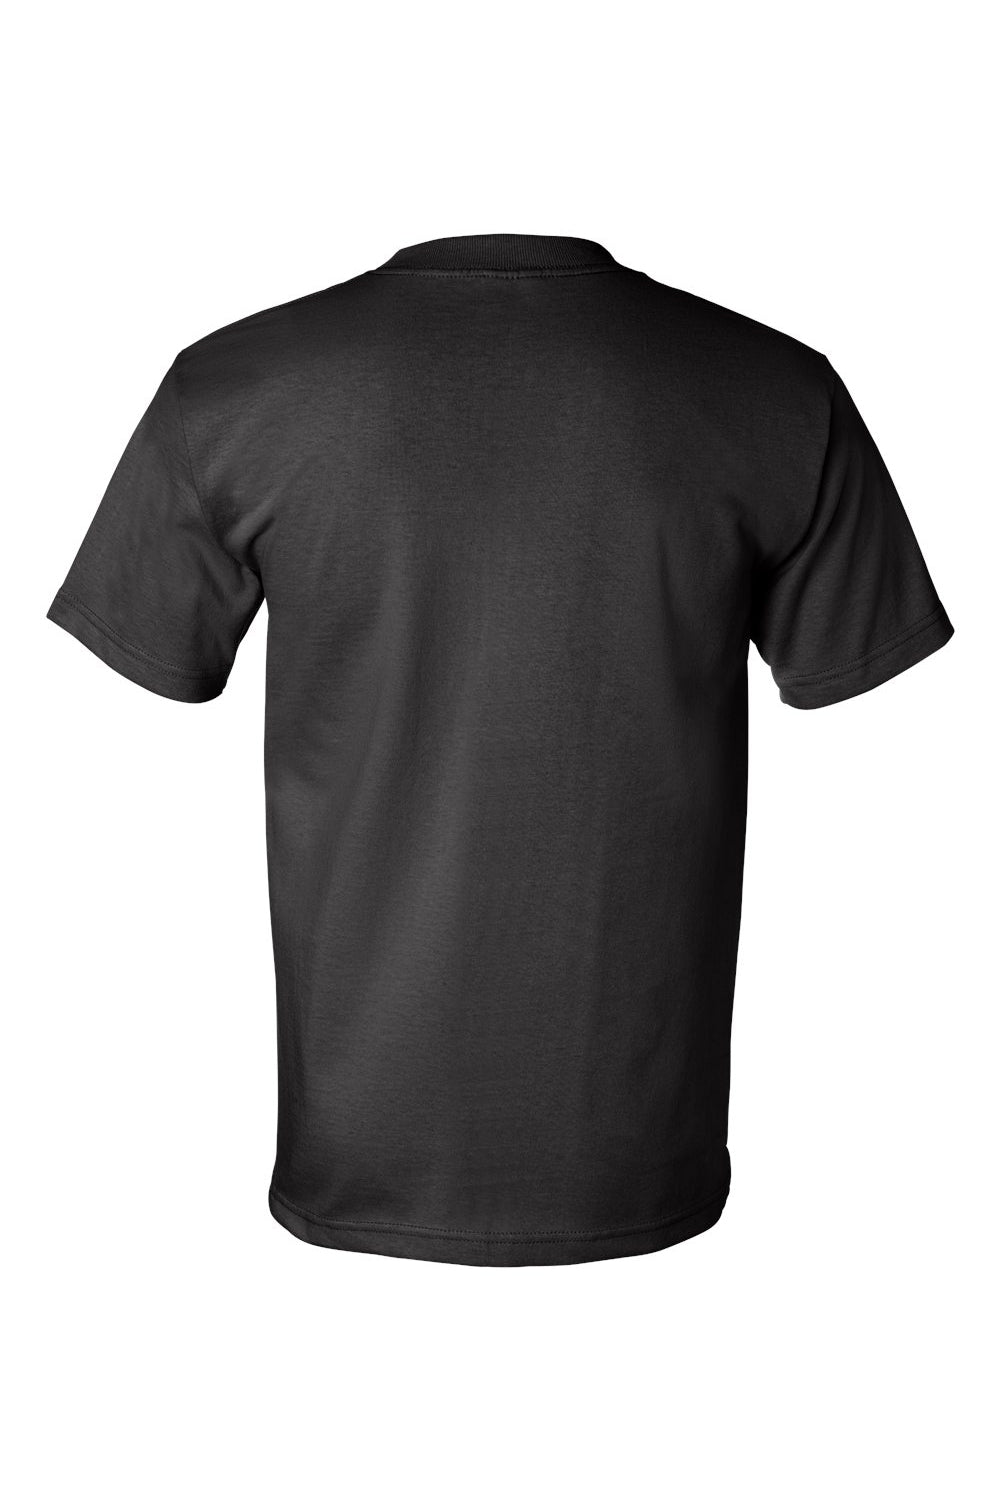 Bayside BA5100 Mens USA Made Short Sleeve Crewneck T-Shirt Black Flat Back